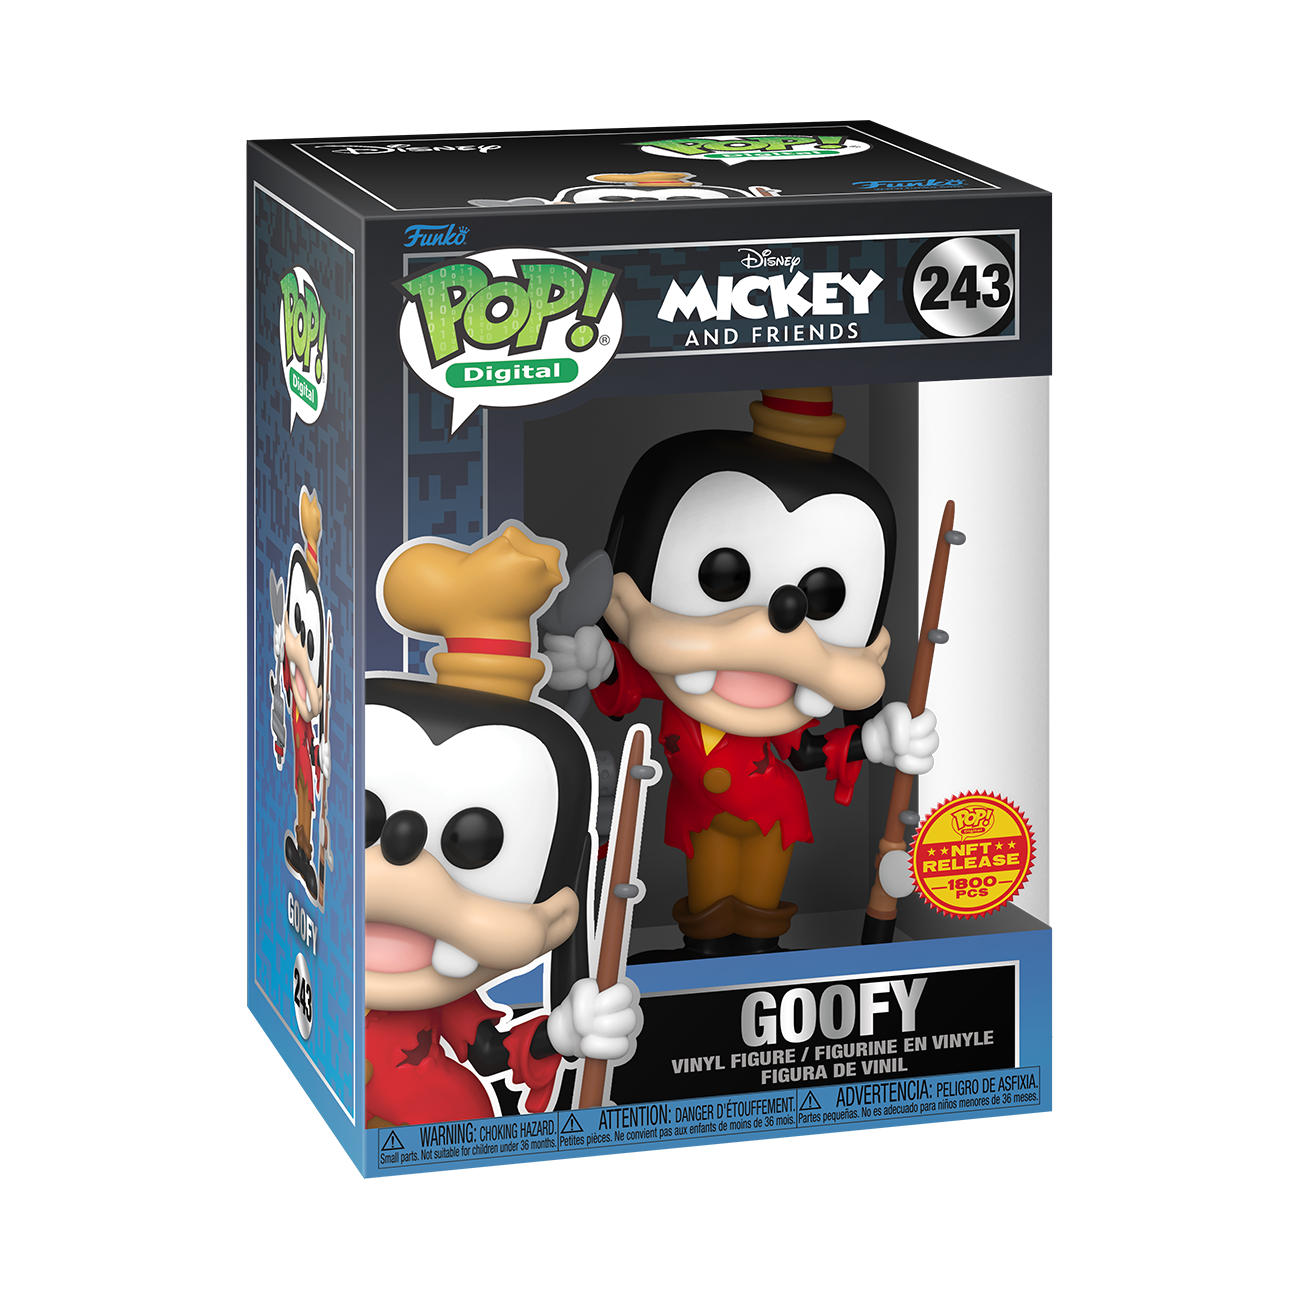 Disney’s Mickey and Friends: Funko Digital Pop! Series 1 Goofy